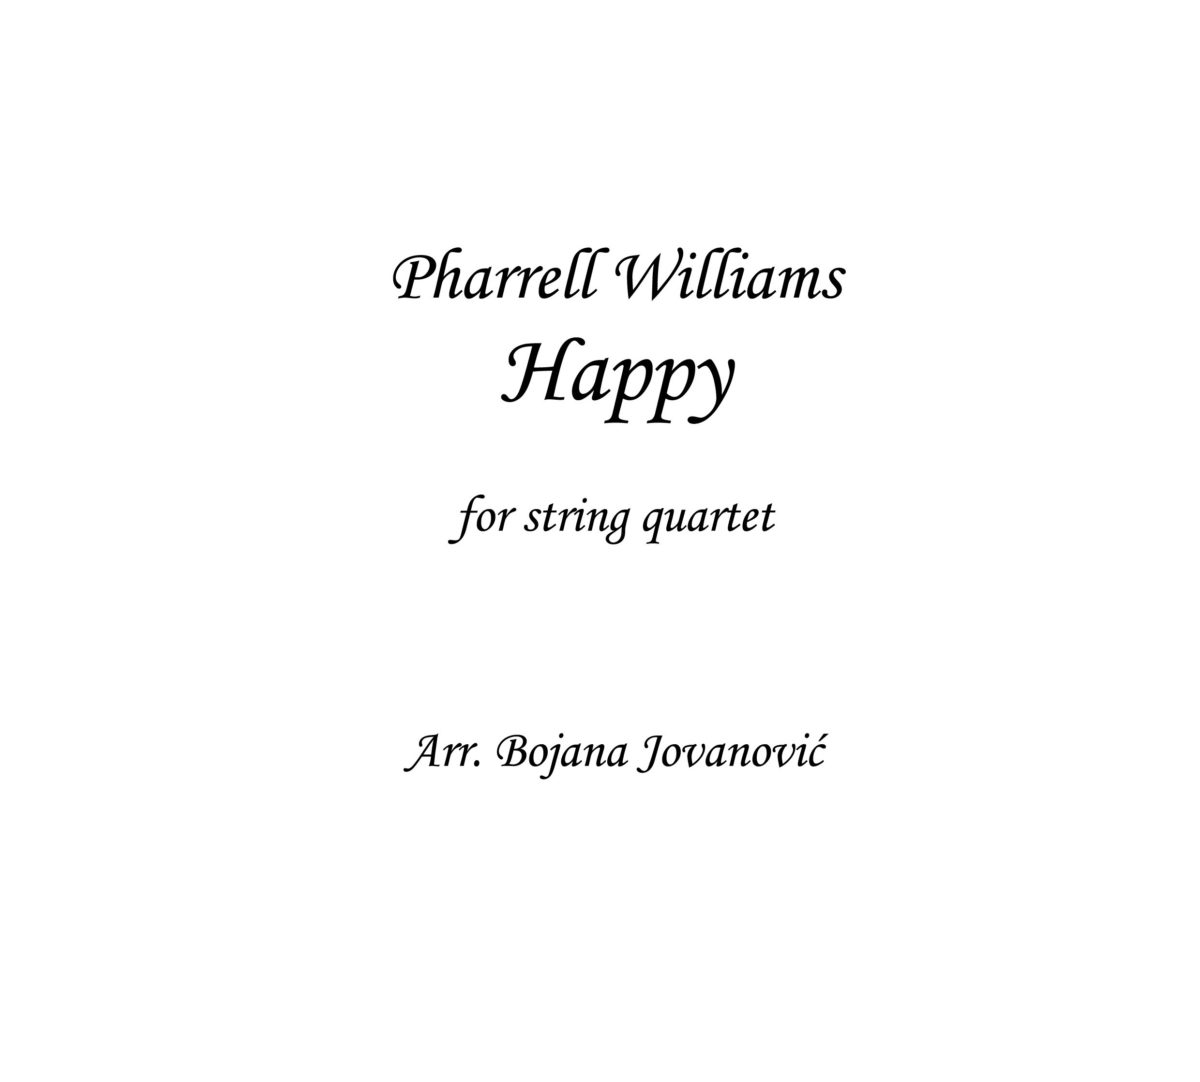 Happy (Pharrell Williams) - Sheet Music